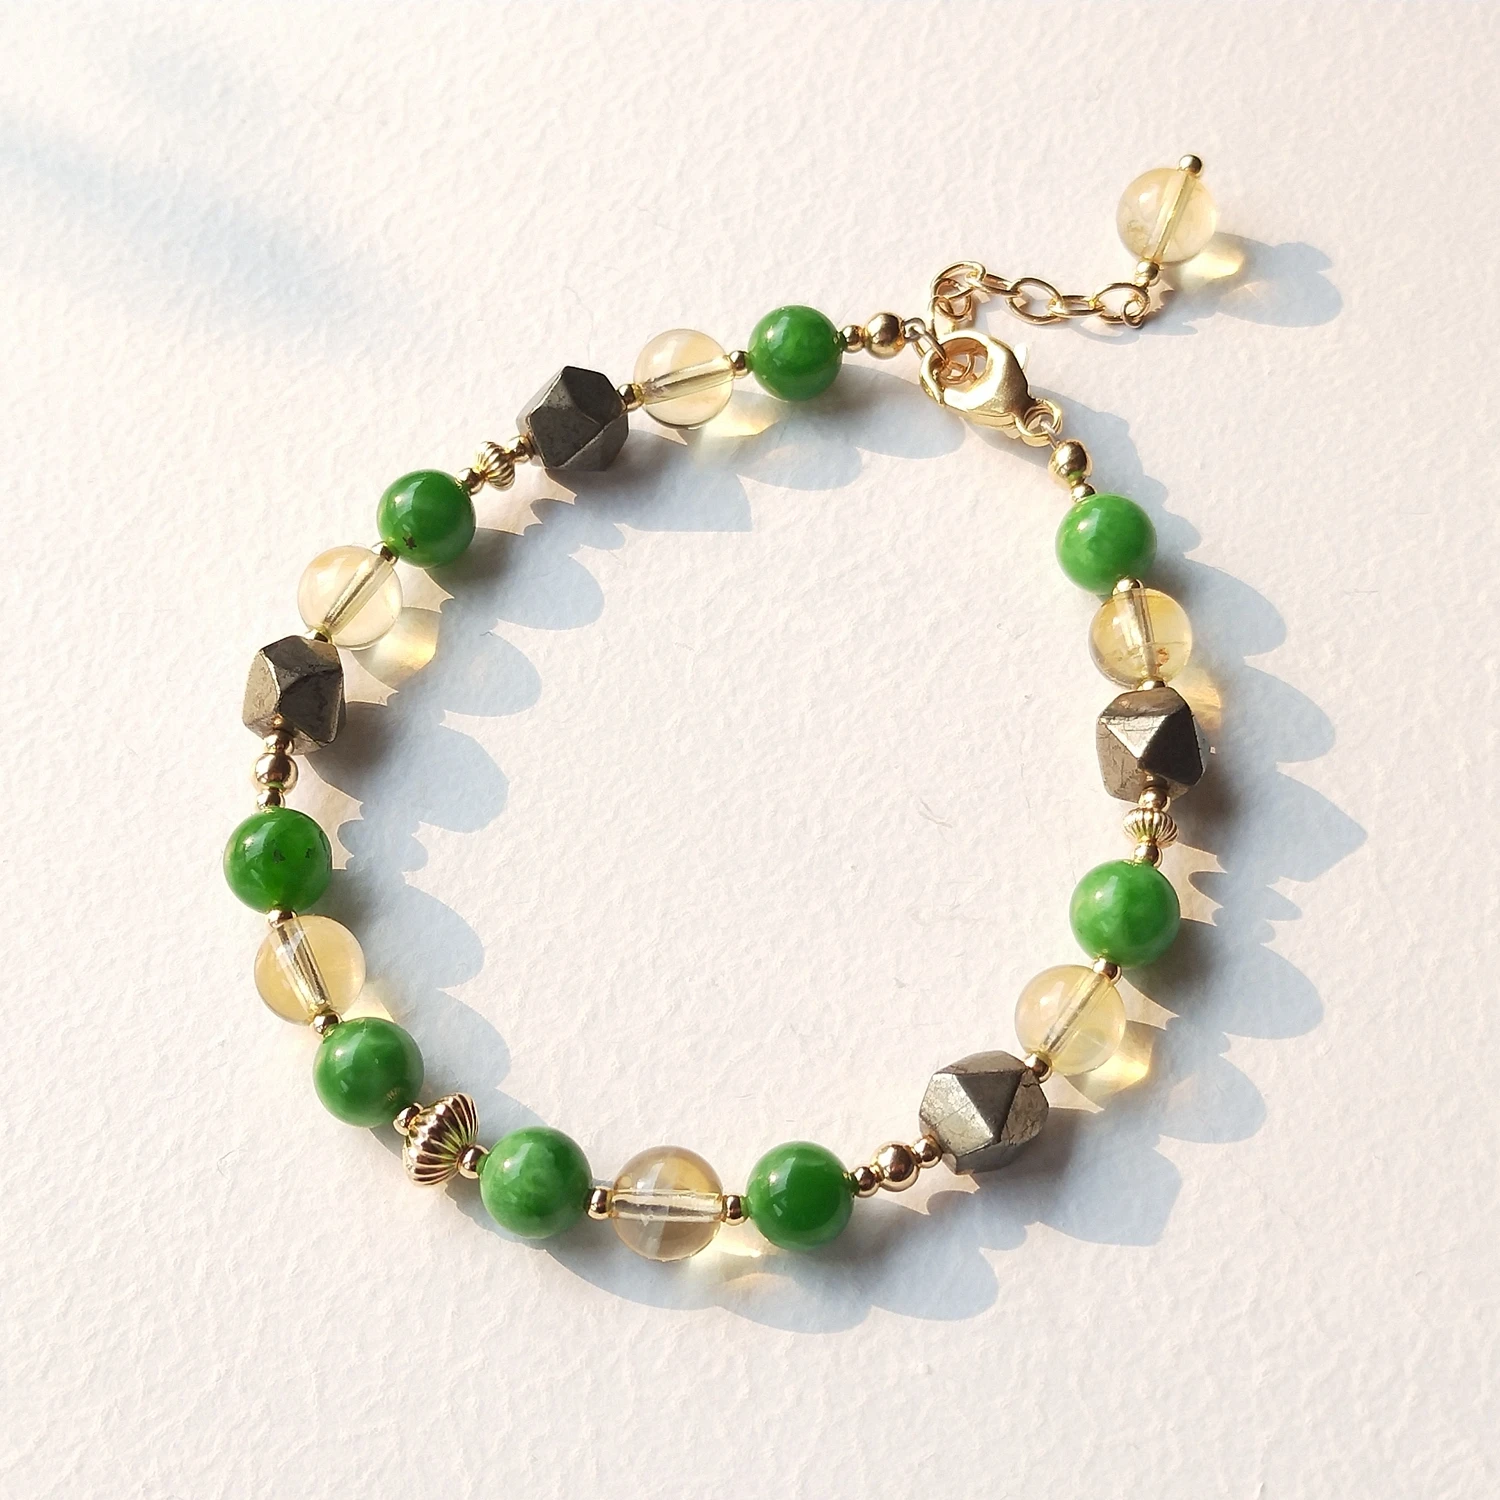 

Lii Ji Citrine Green Jade Pyrite 14K Gold Filled Natural Stone 6mm Beads Handmade Bracelet Sparkling Jewelry For Women Gift